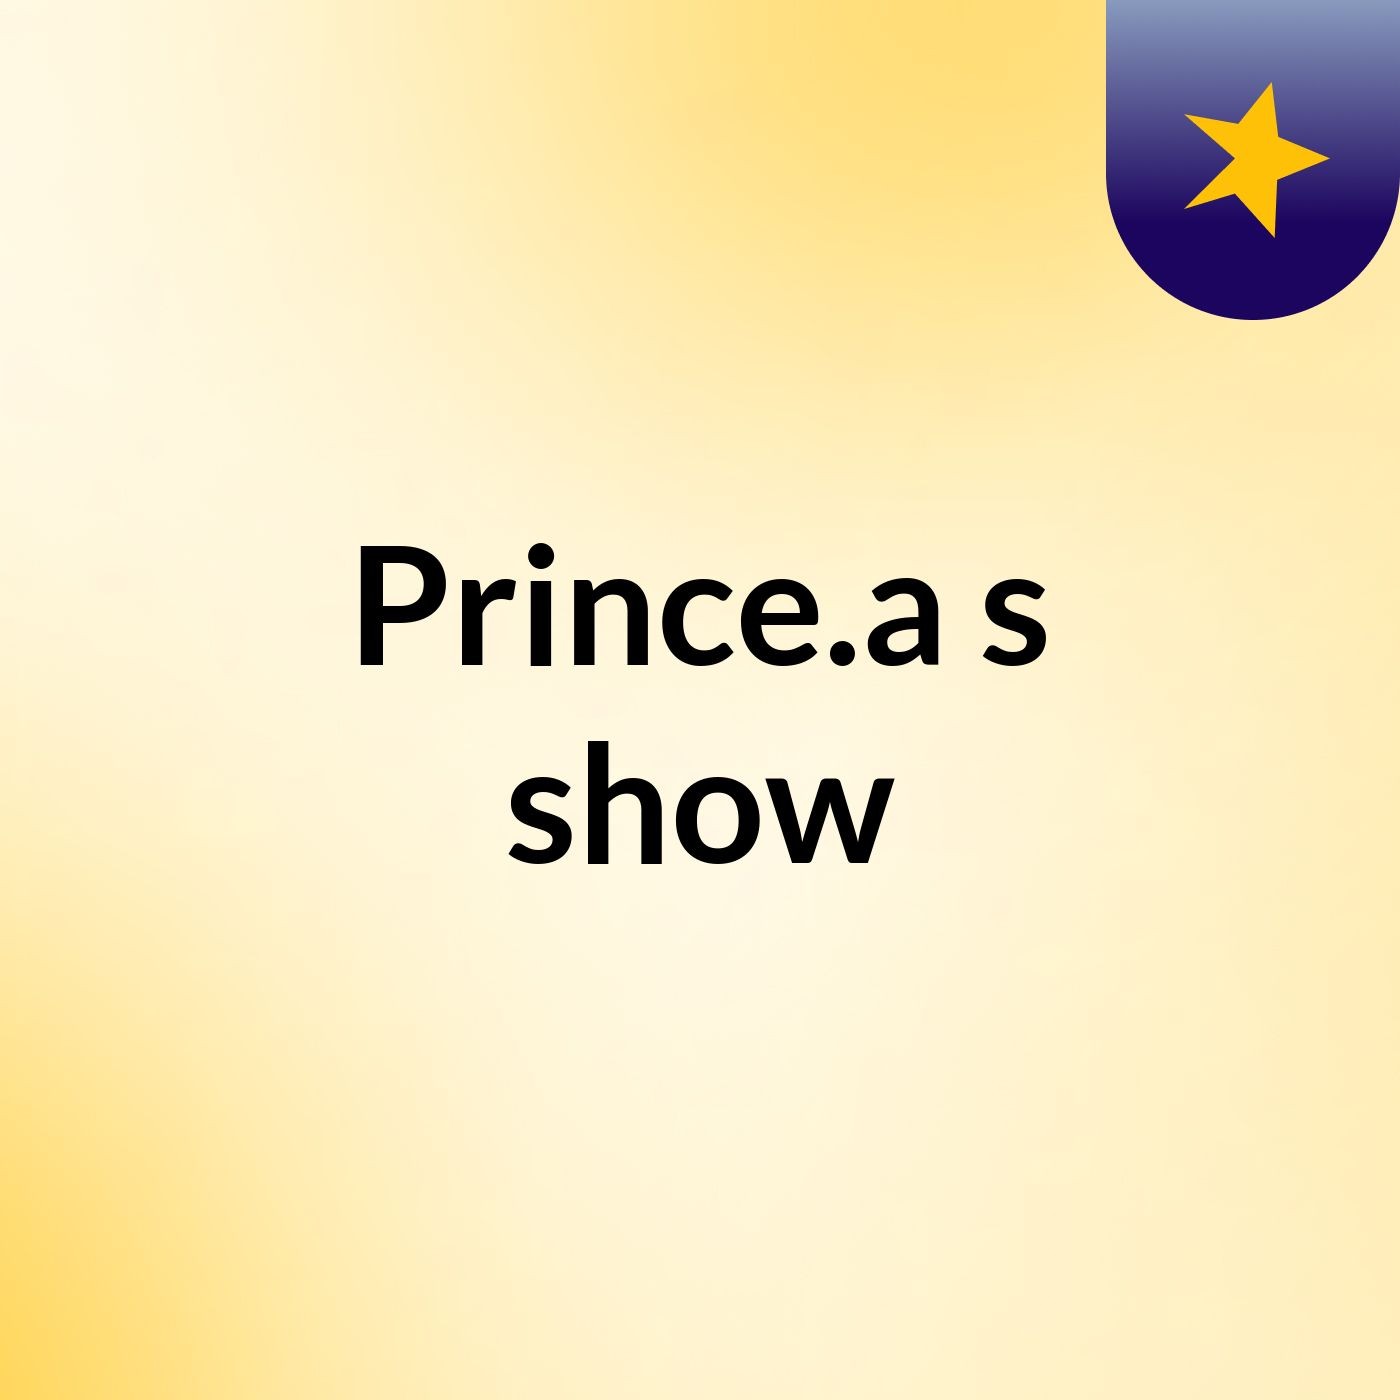 Prince.a's show